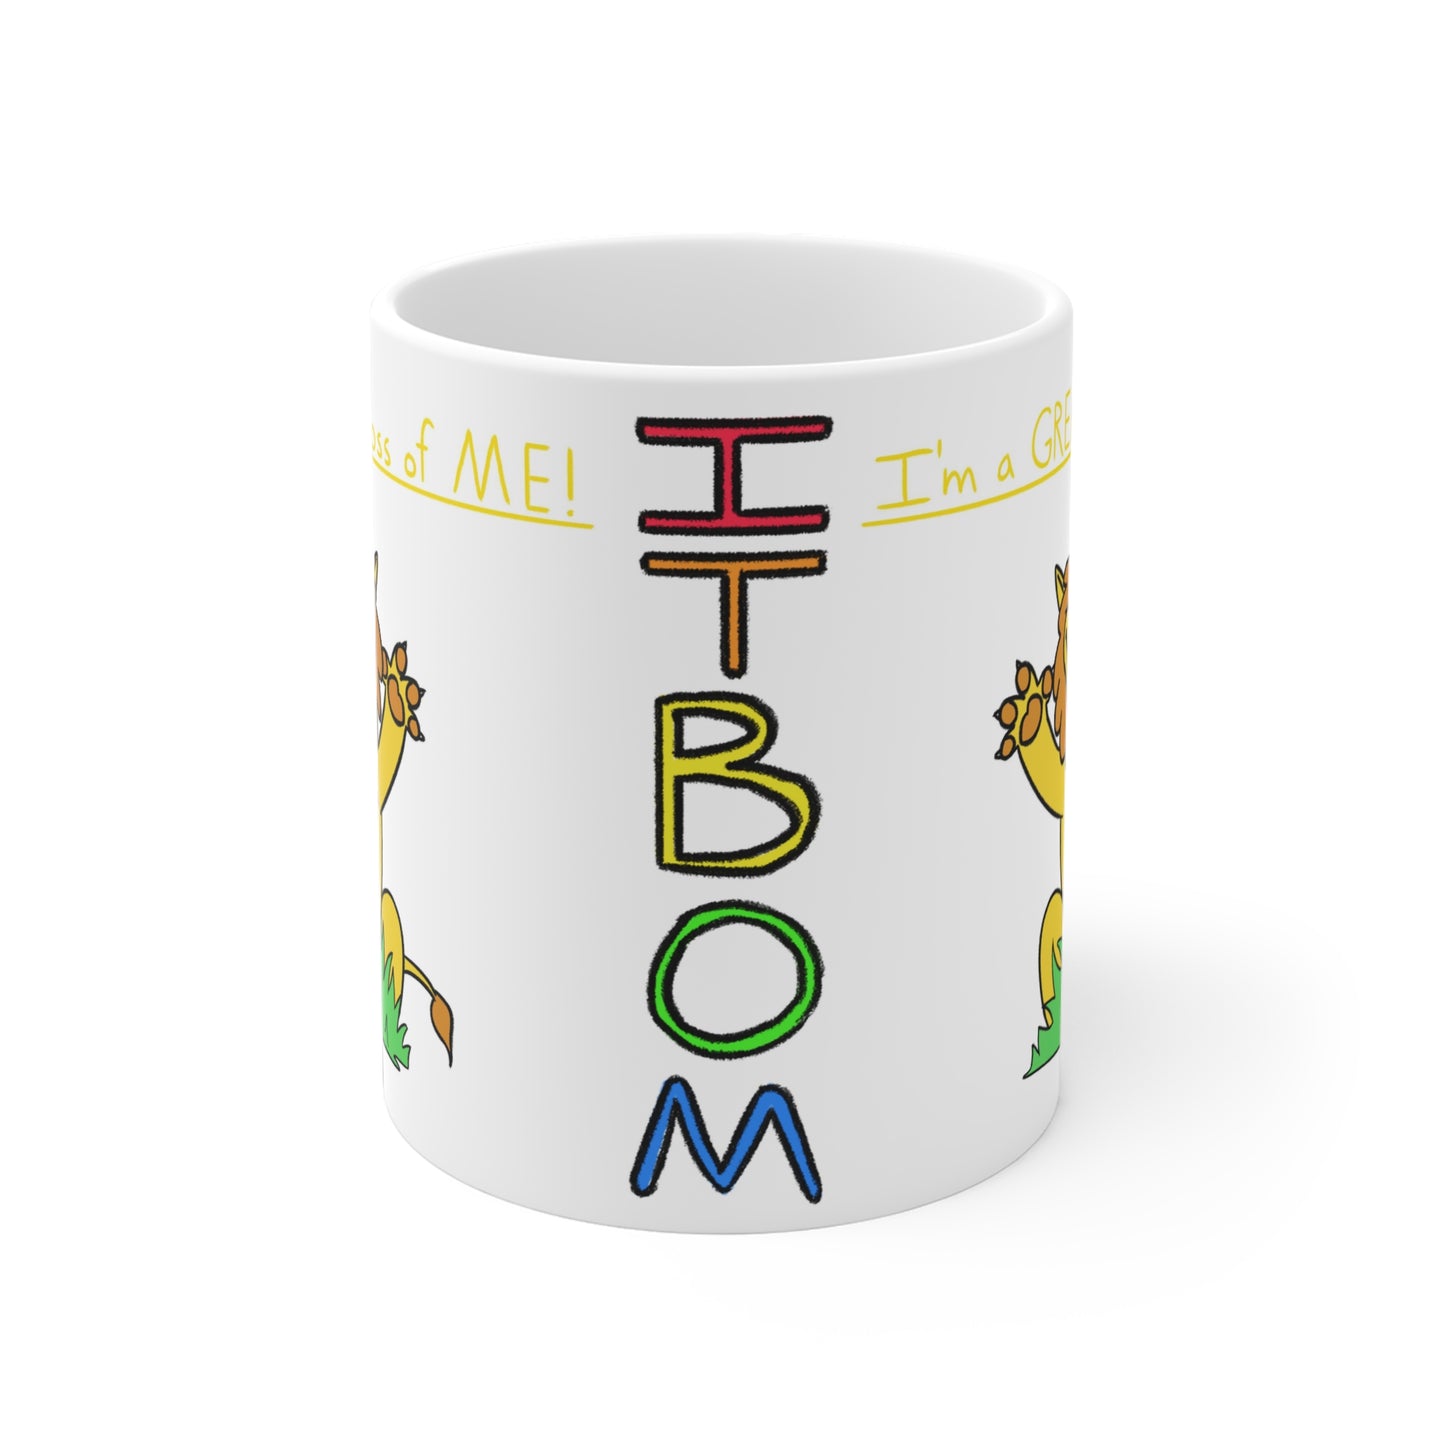 ITBOM LION BOSS Ceramic Mugs (11oz15oz20oz)